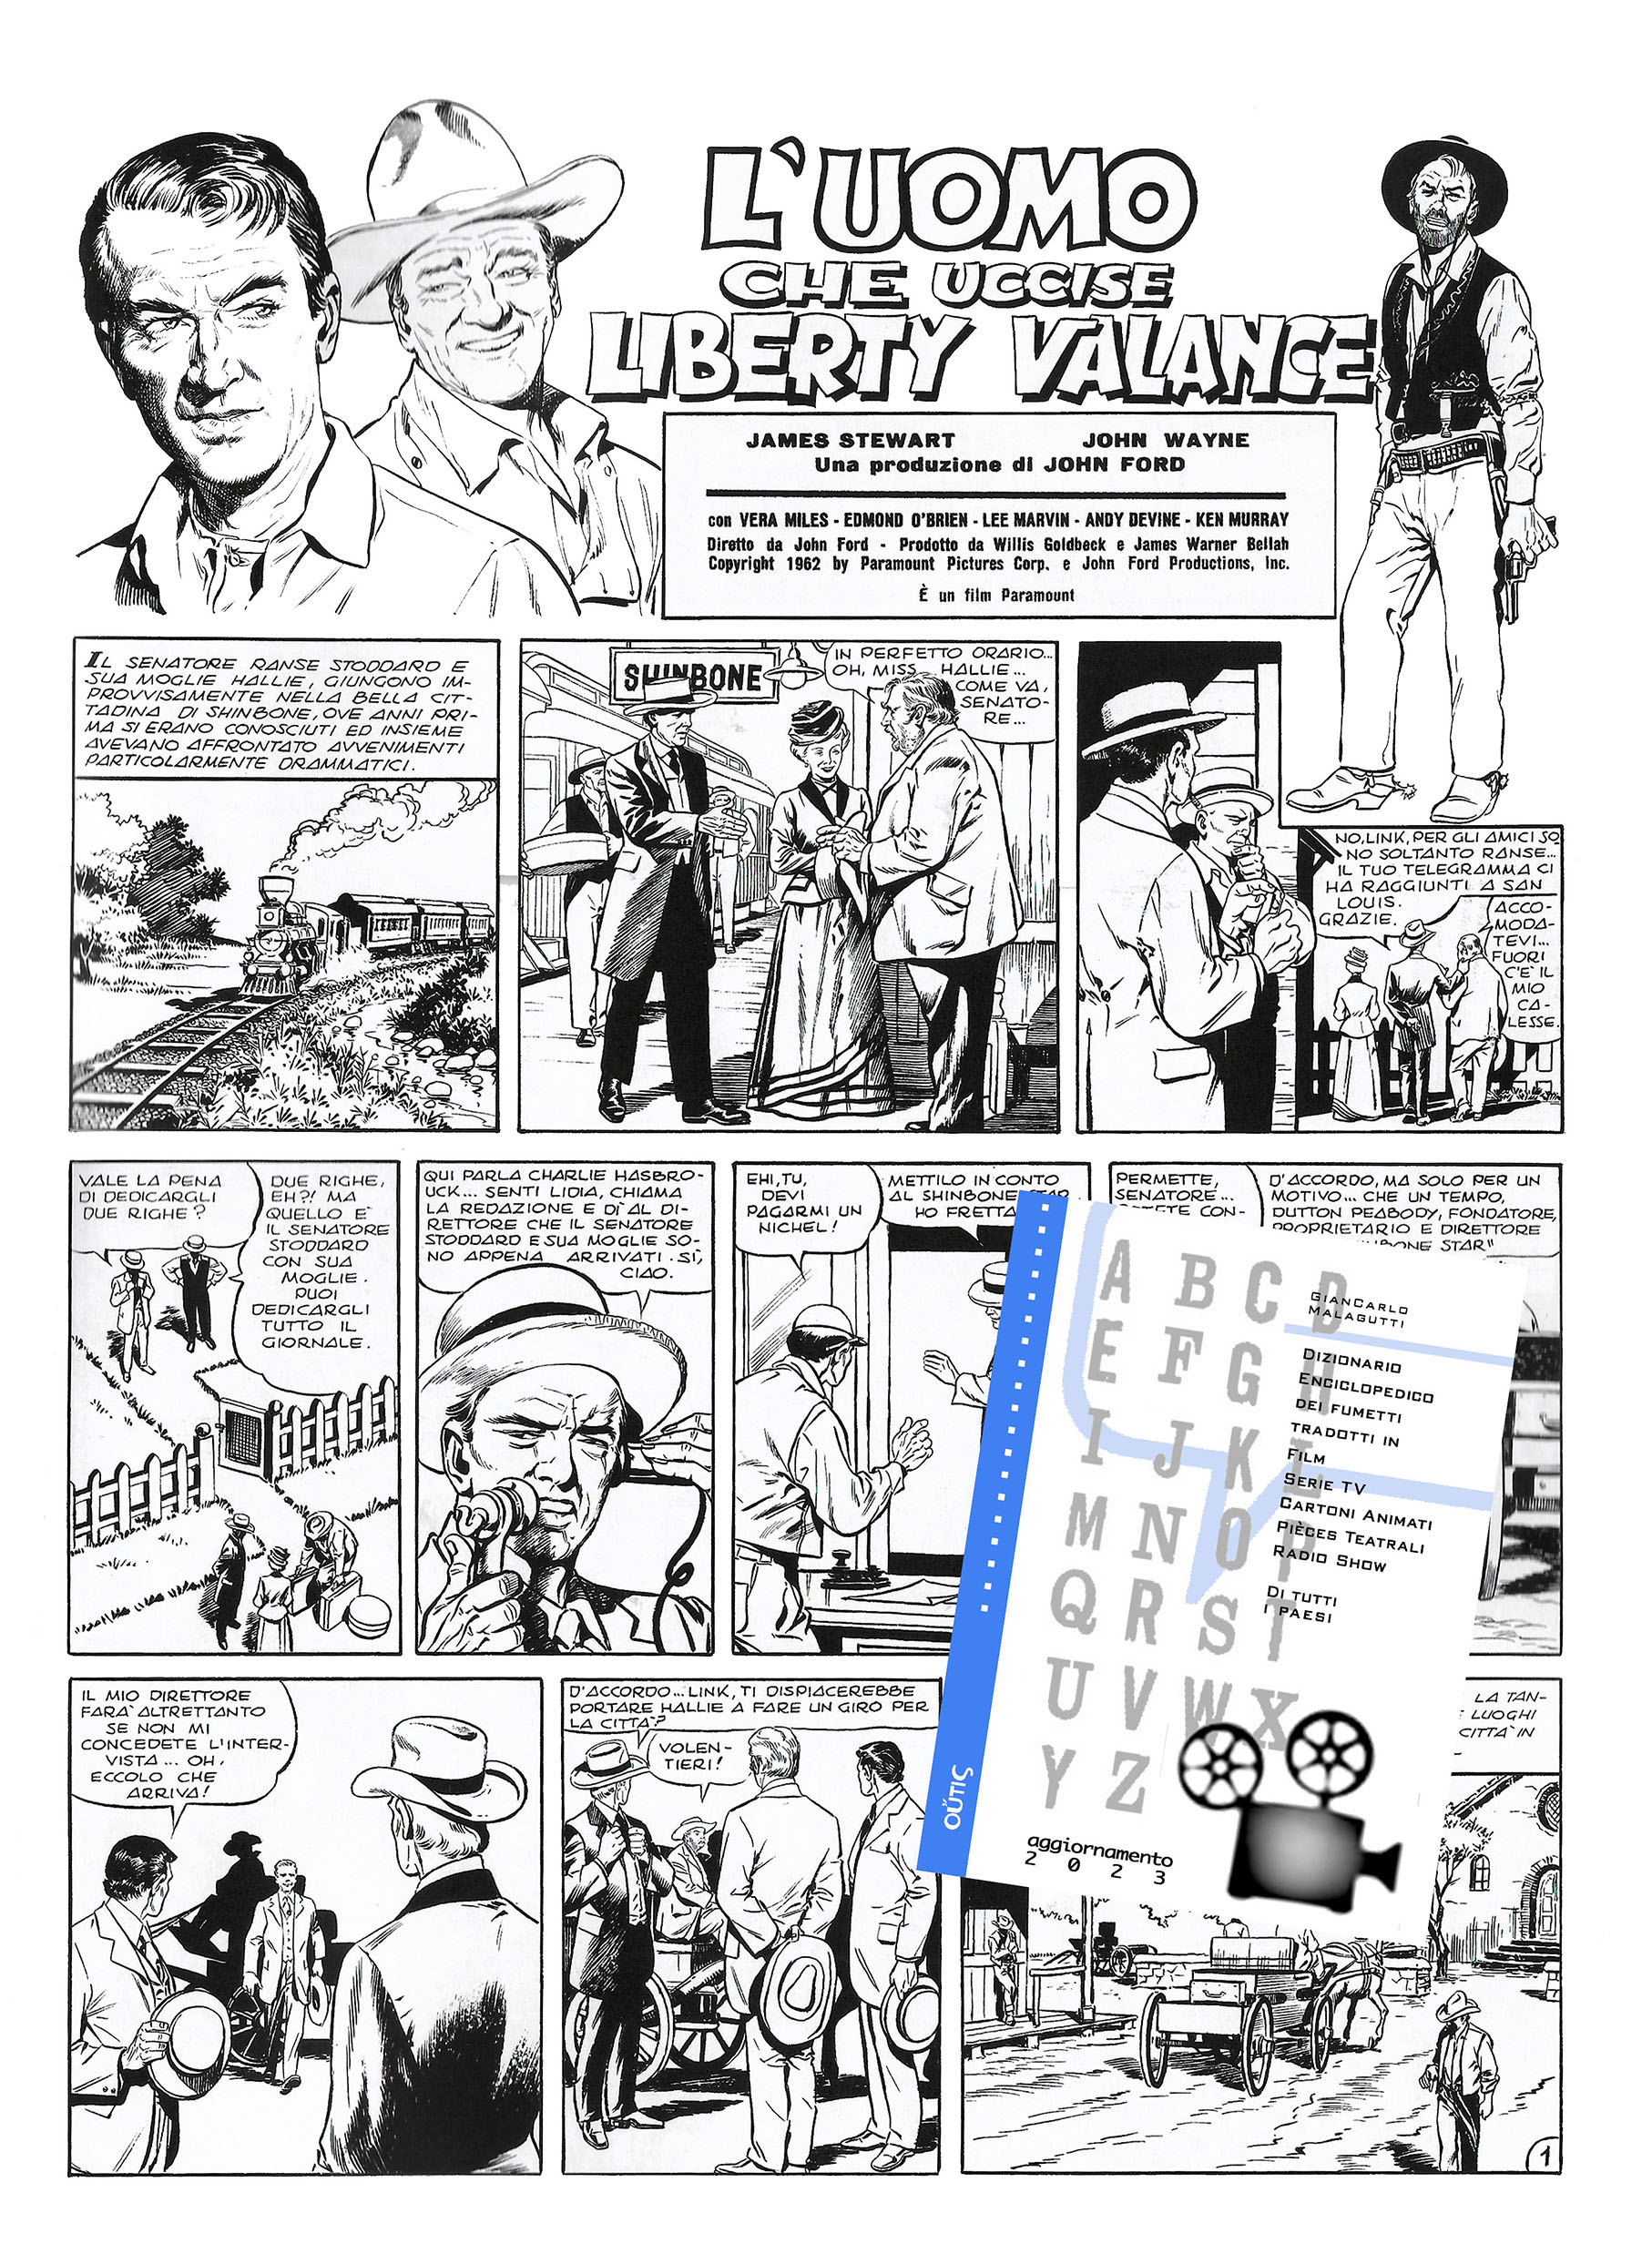 The Man Who Shot Liberty Valance the Comic